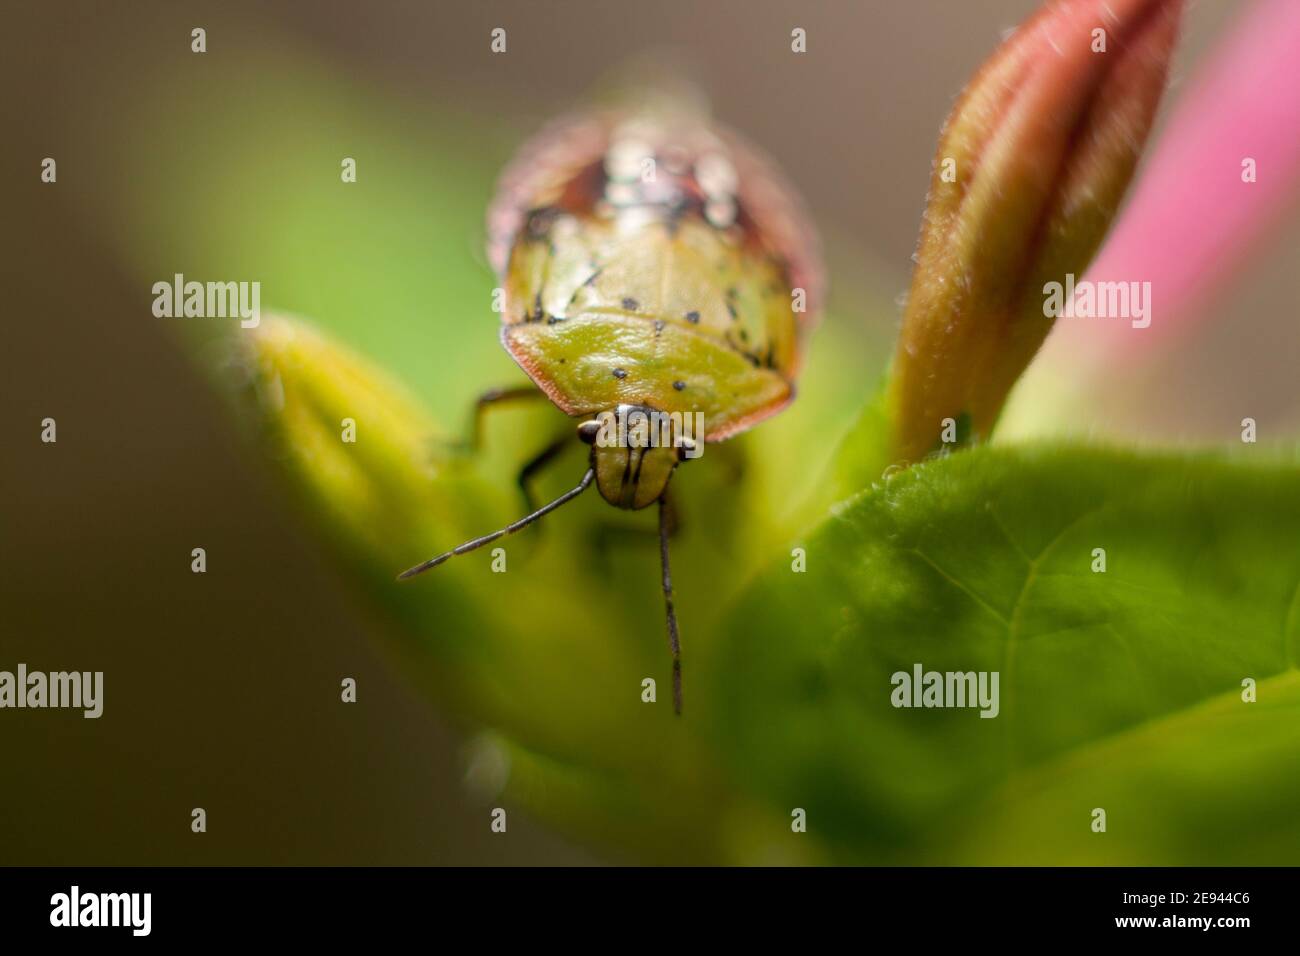 Funny smiling green beetle Nezara viridula on flower selective focus Stock Photo